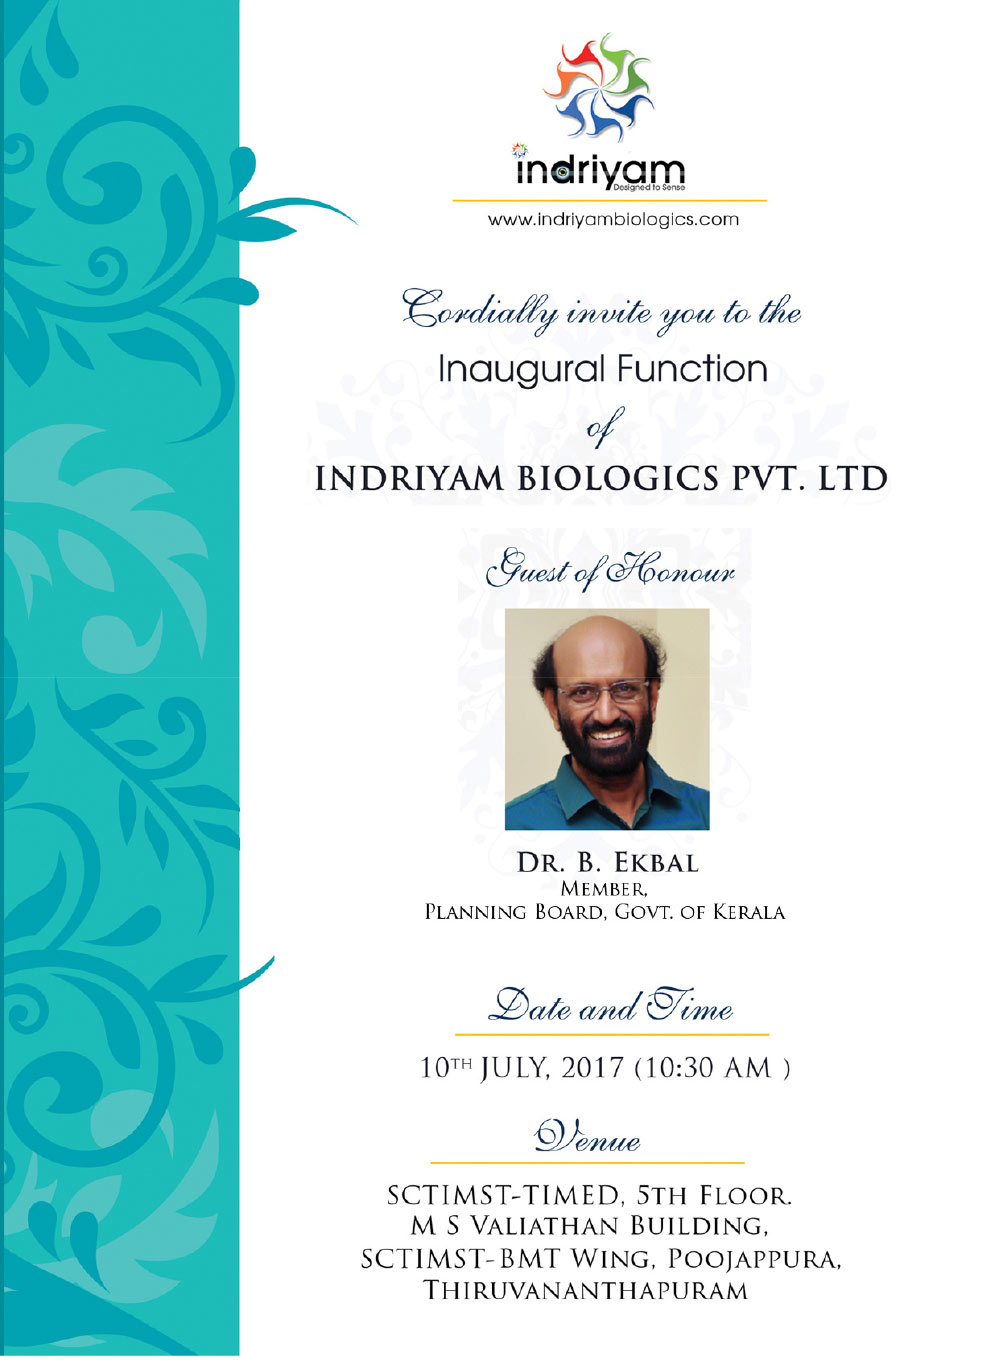 Launch of Indriyam Biologics

